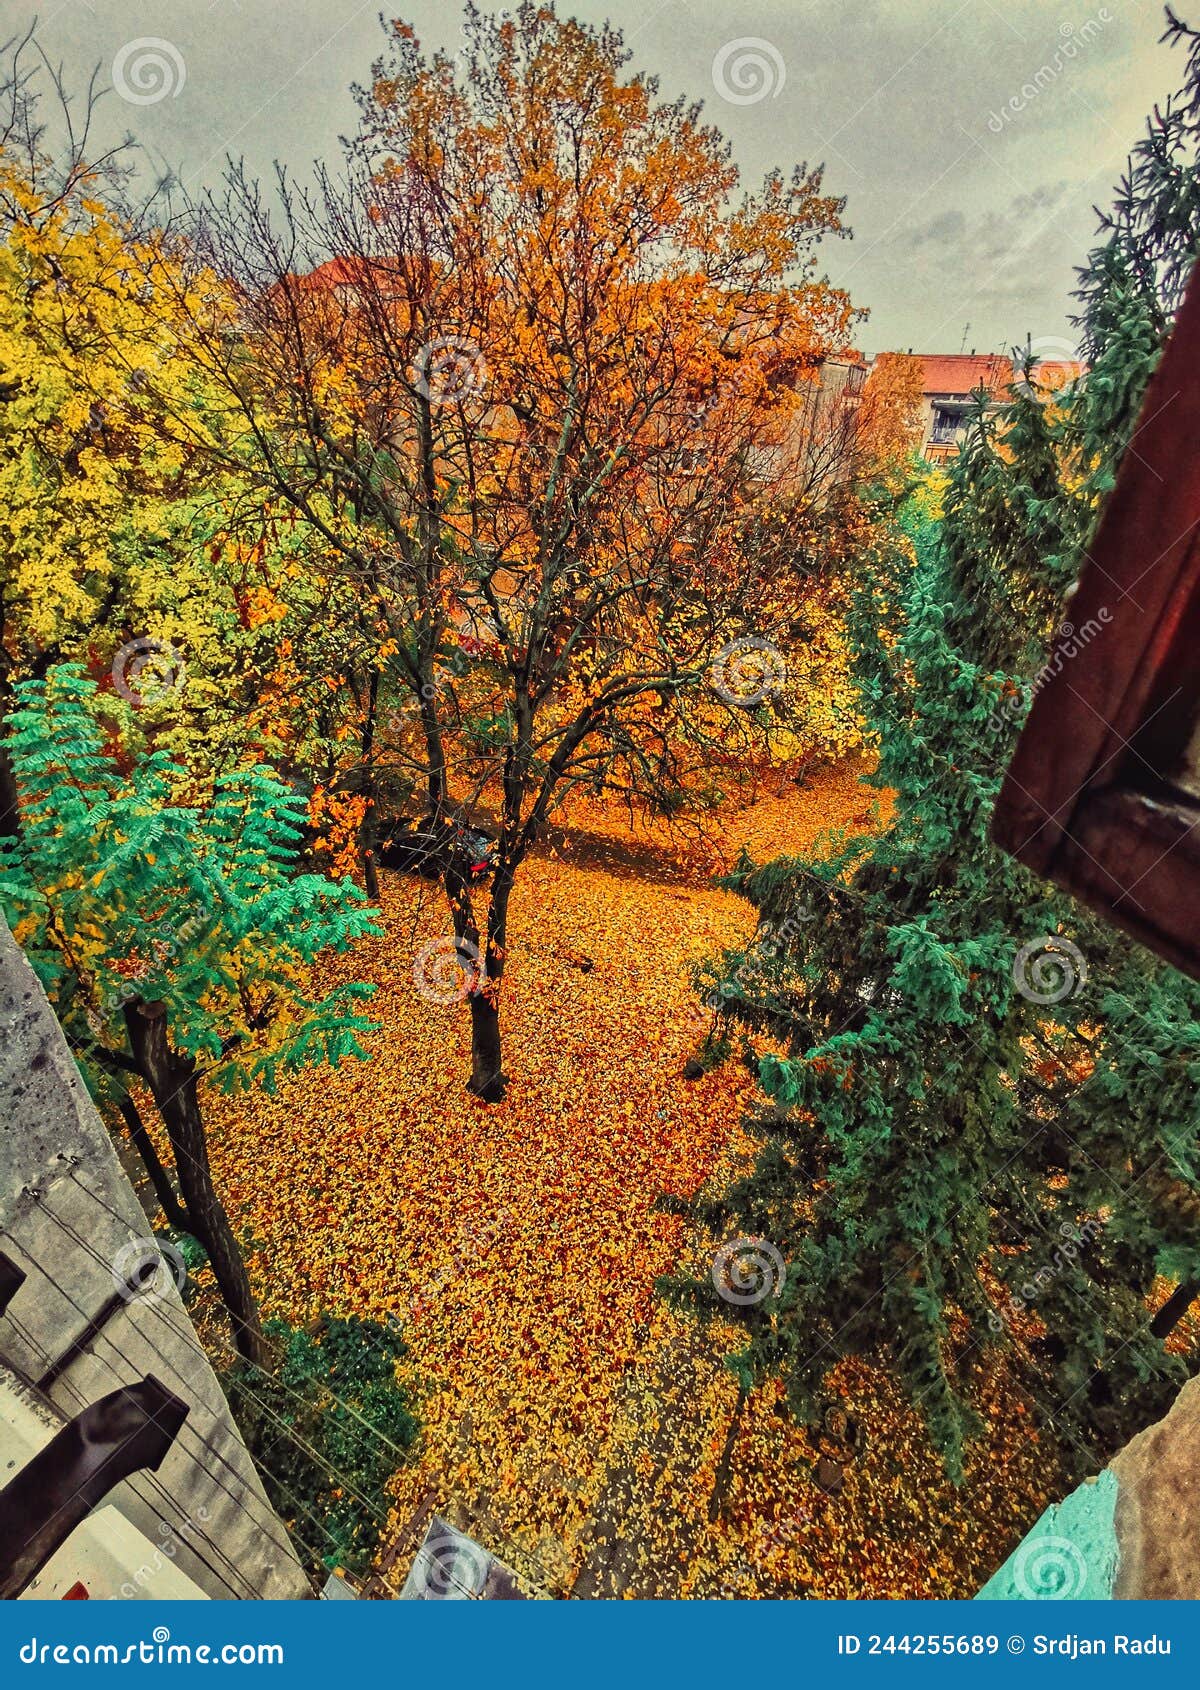 fall colore tree